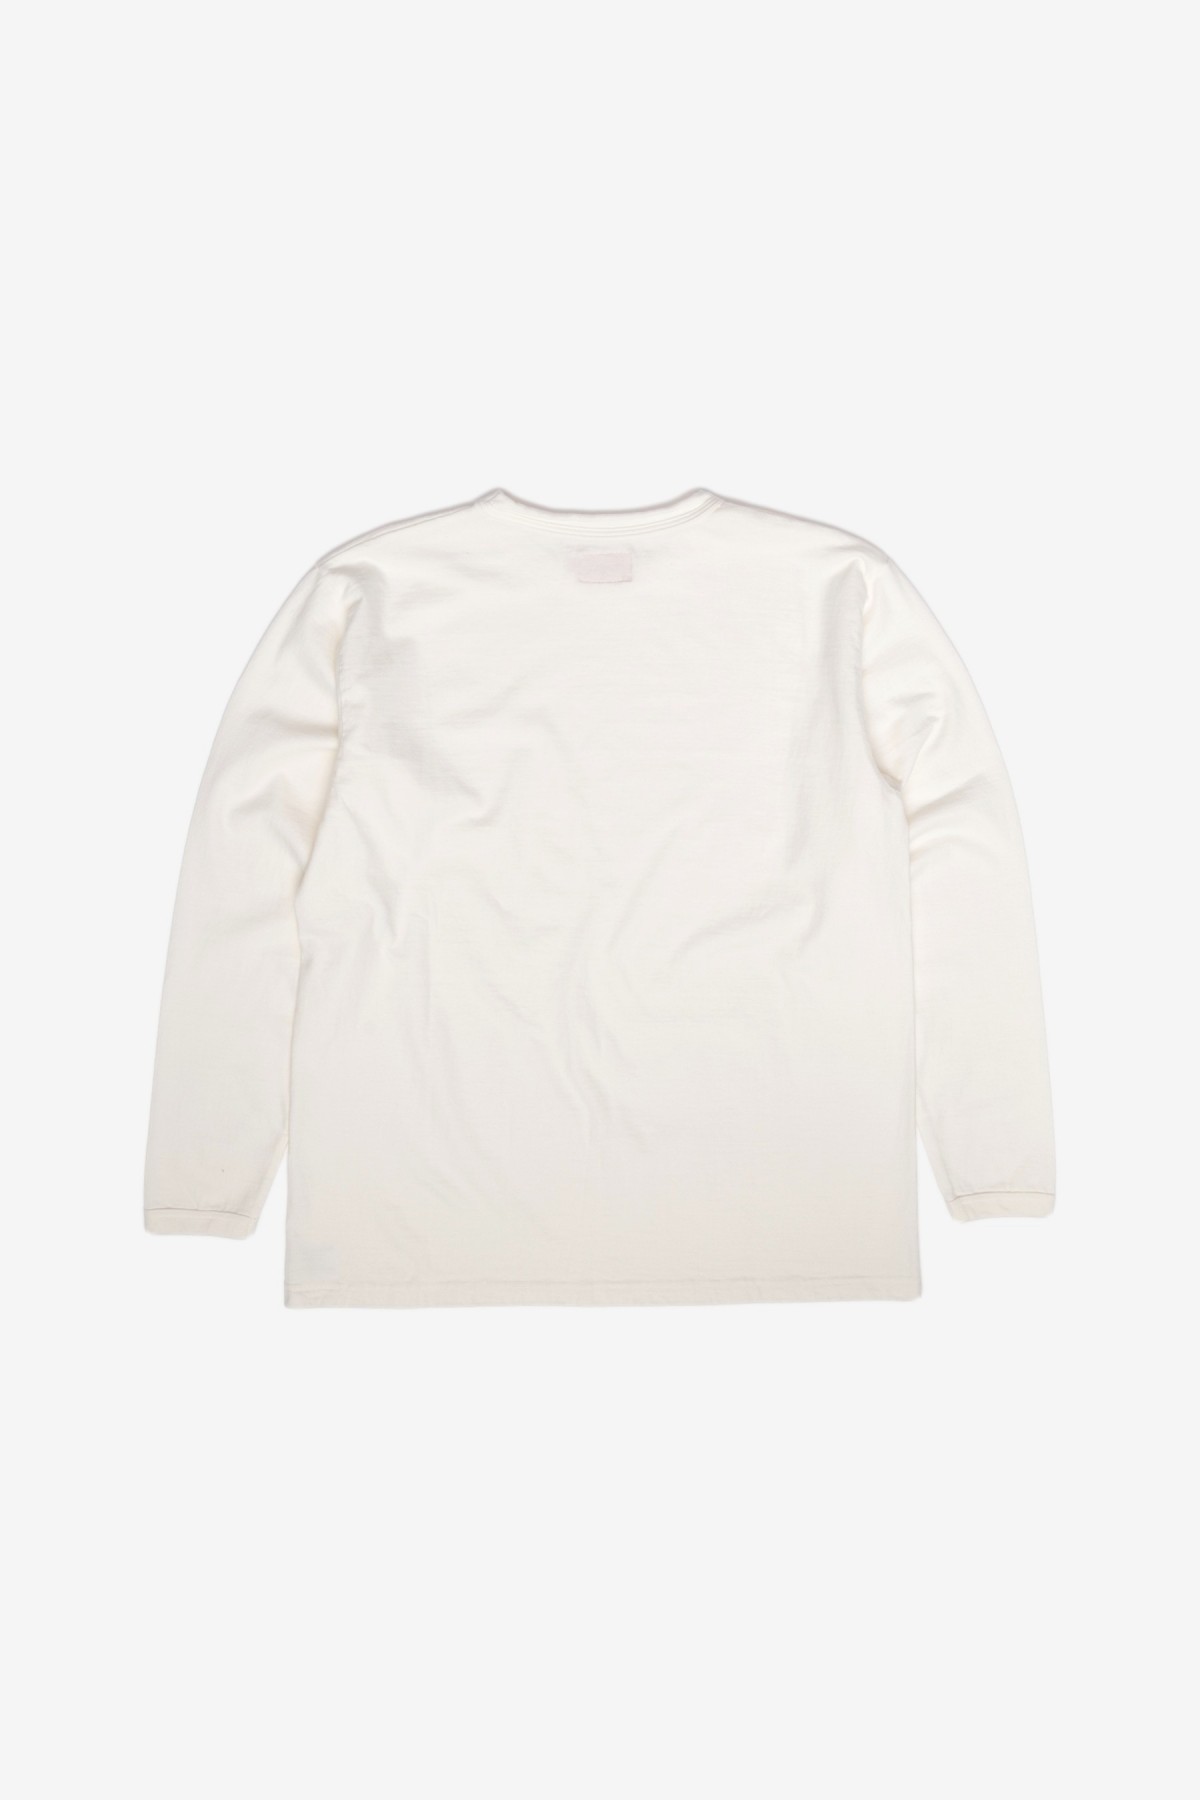 Sunray Sportswear Makaha Long Sleeve T-Shirt in Off White